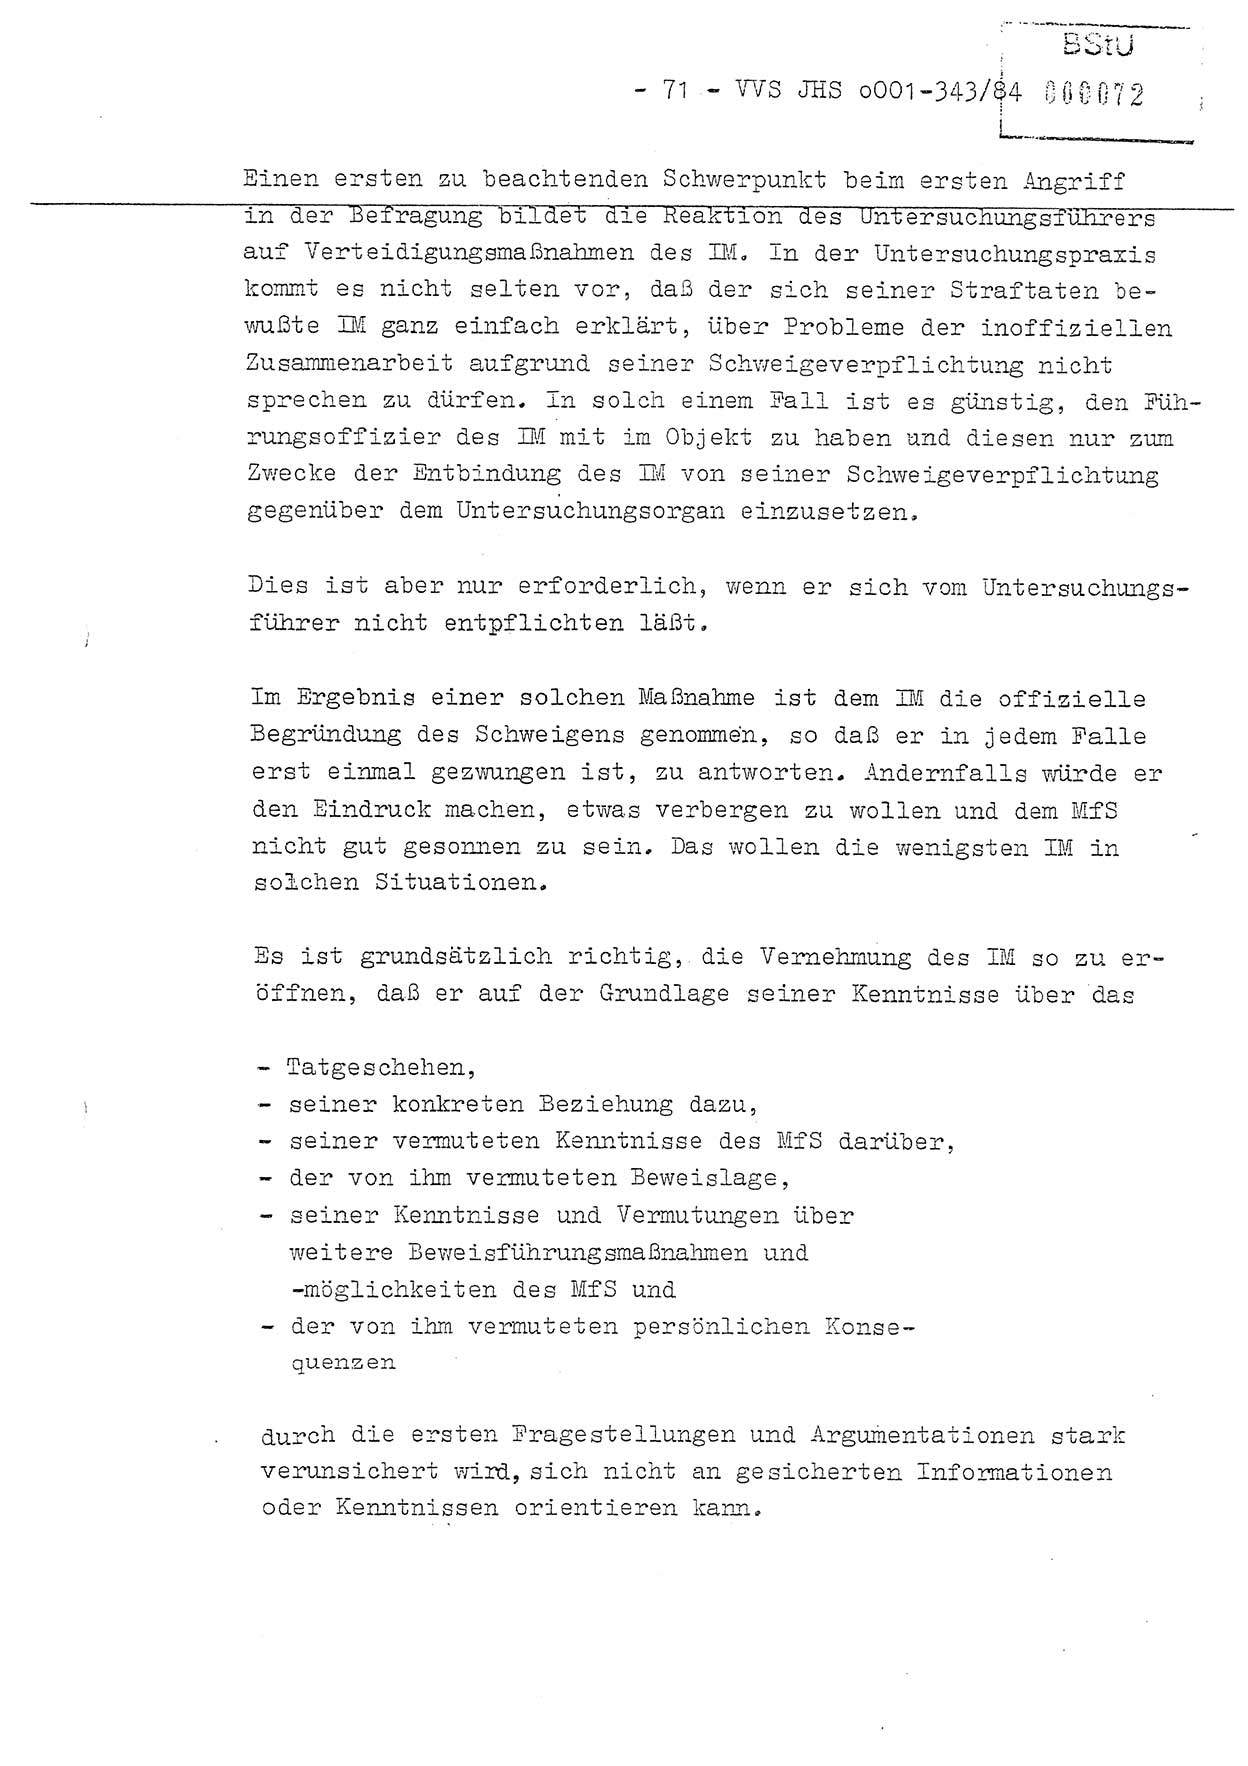 Diplomarbeit, Oberleutnant Bernd Michael (HA Ⅸ/5), Oberleutnant Peter Felber (HA IX/5), Ministerium für Staatssicherheit (MfS) [Deutsche Demokratische Republik (DDR)], Juristische Hochschule (JHS), Vertrauliche Verschlußsache (VVS) o001-343/84, Potsdam 1985, Seite 71 (Dipl.-Arb. MfS DDR JHS VVS o001-343/84 1985, S. 71)